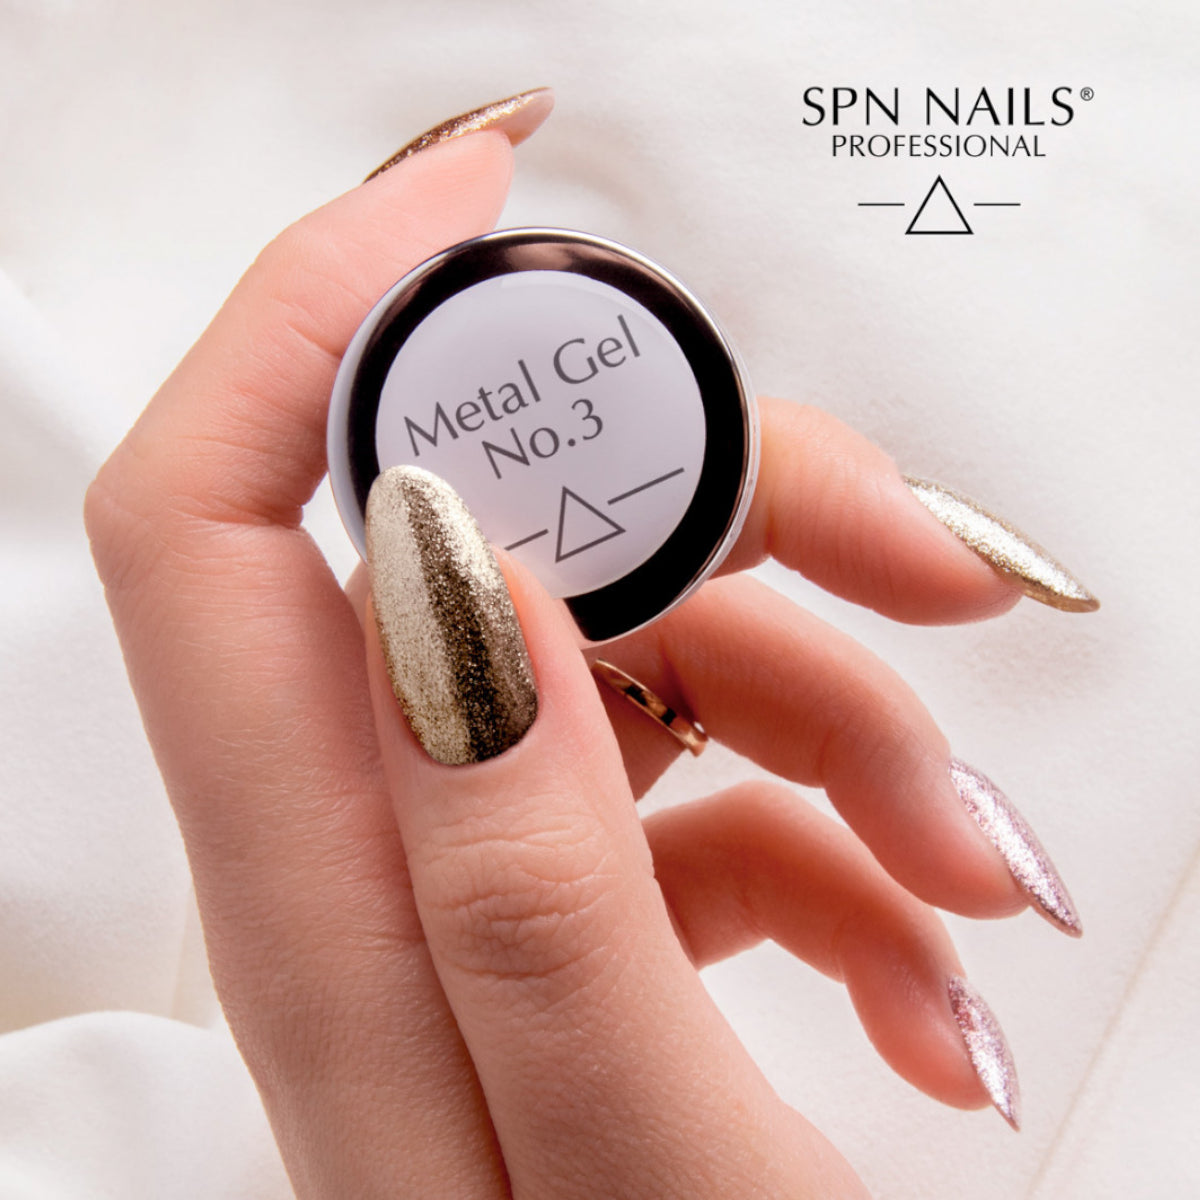 SPN Nails Metal Gel No.3 White Gold Swatch